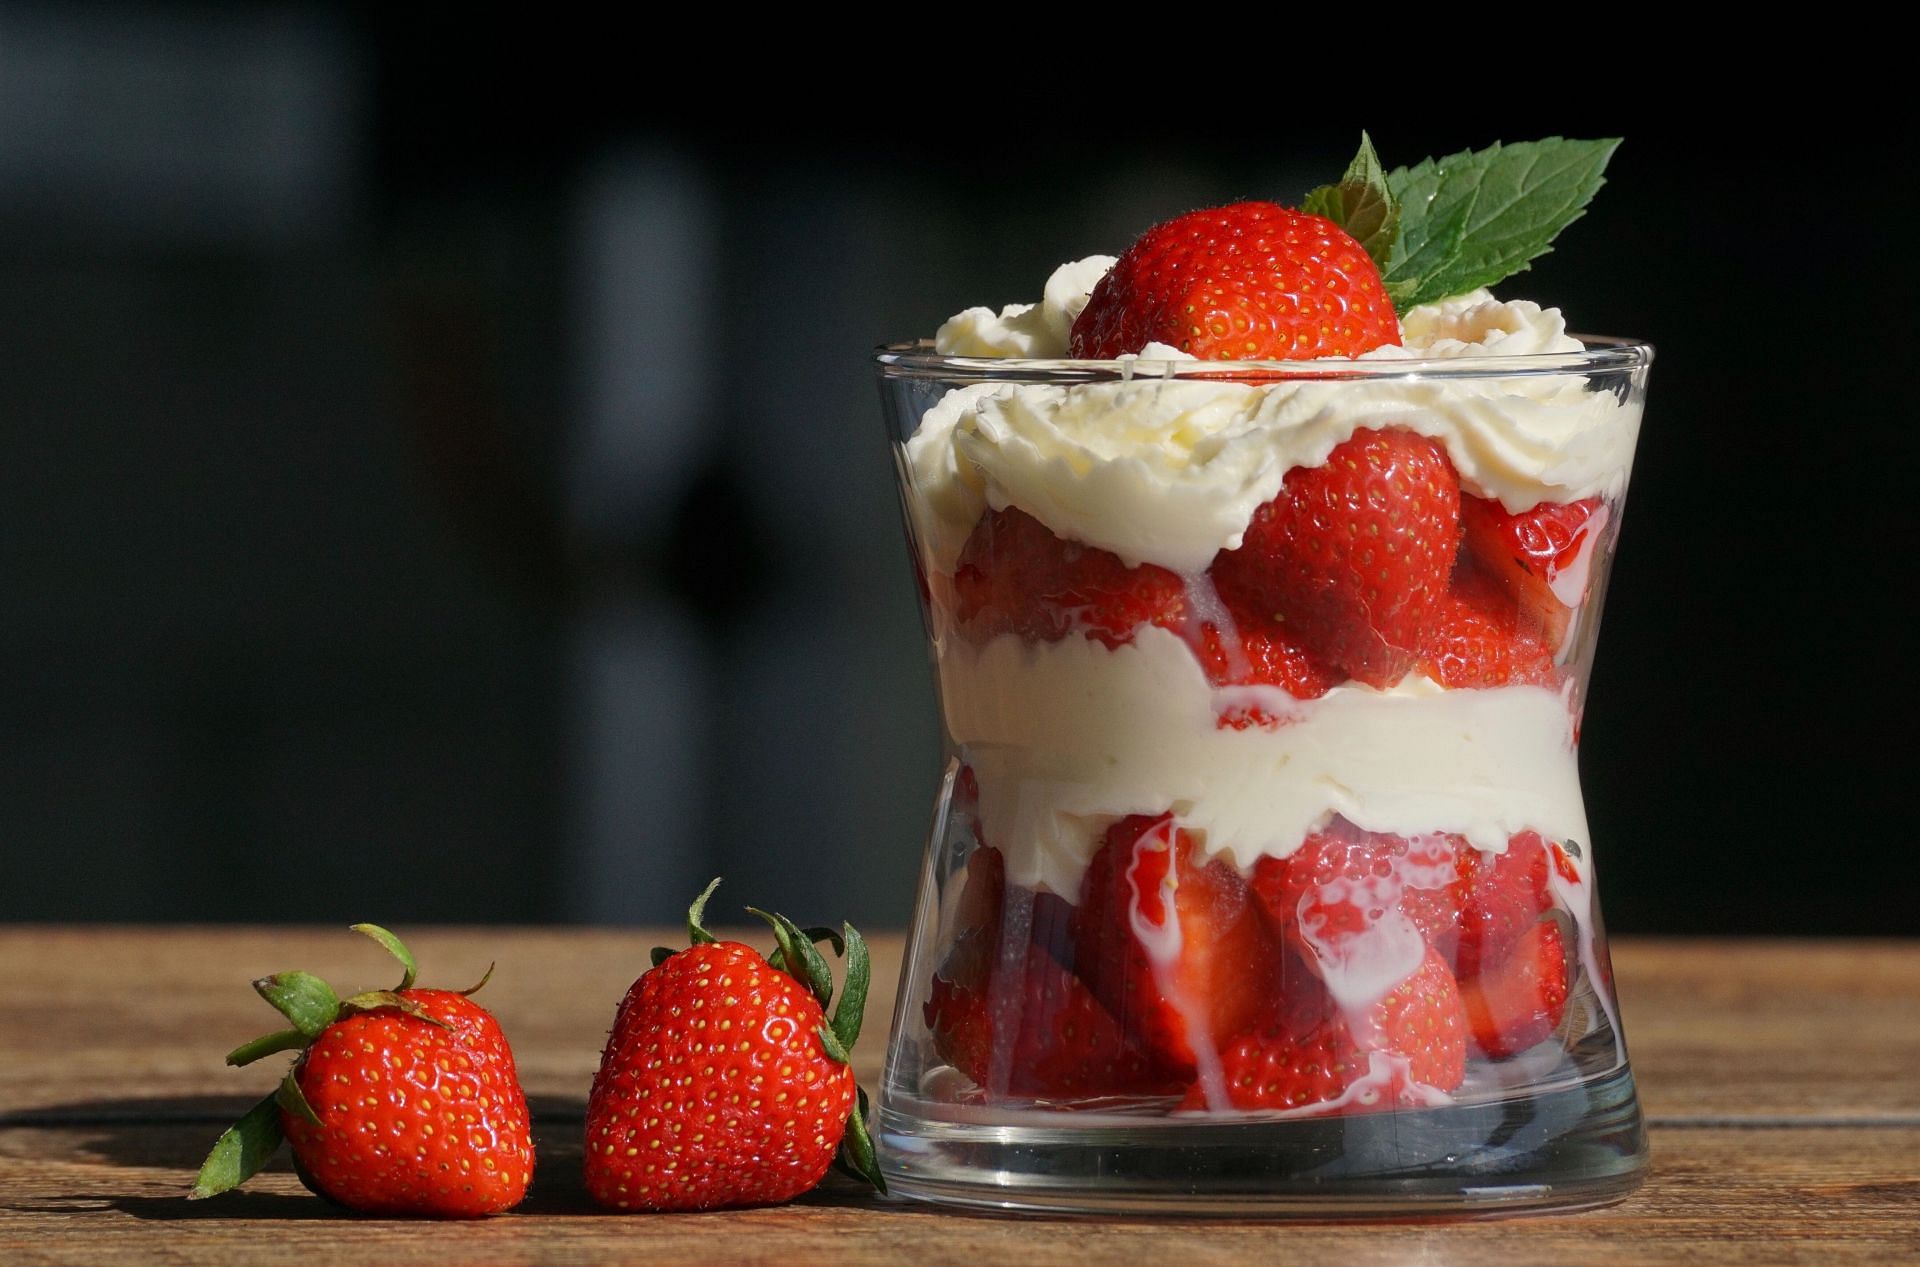 Strawberry has anti-aging benefits for the skin. (Image via Pexels/Suzanne Jutzeler Sujufoto)